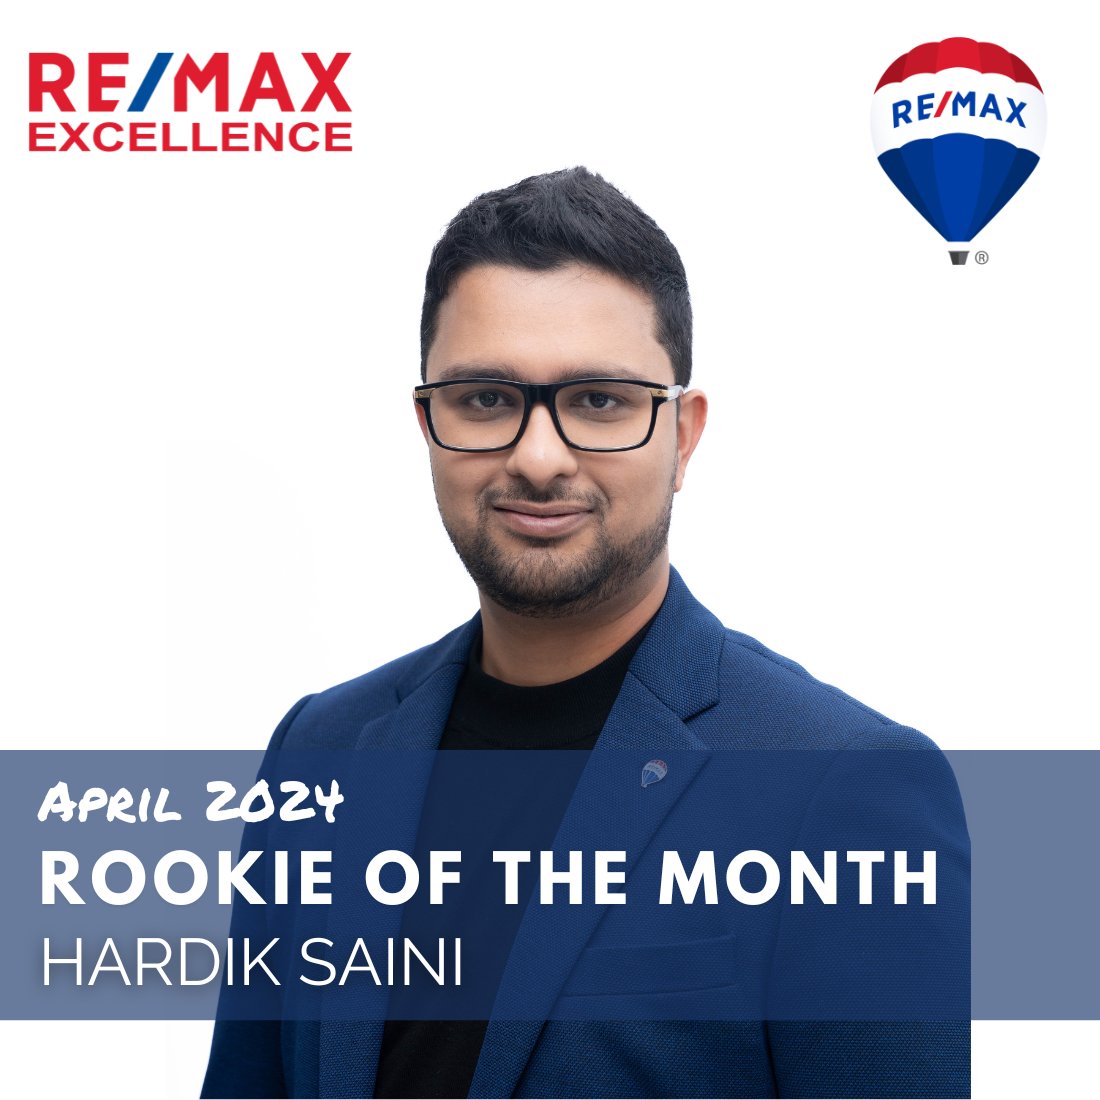 Congratulations to our Rookie of the Month for April - Hardik Saini!
.
.
#edmontonhomesforsale #yeghomes #yegrealestate #movetoalberta #edmonton